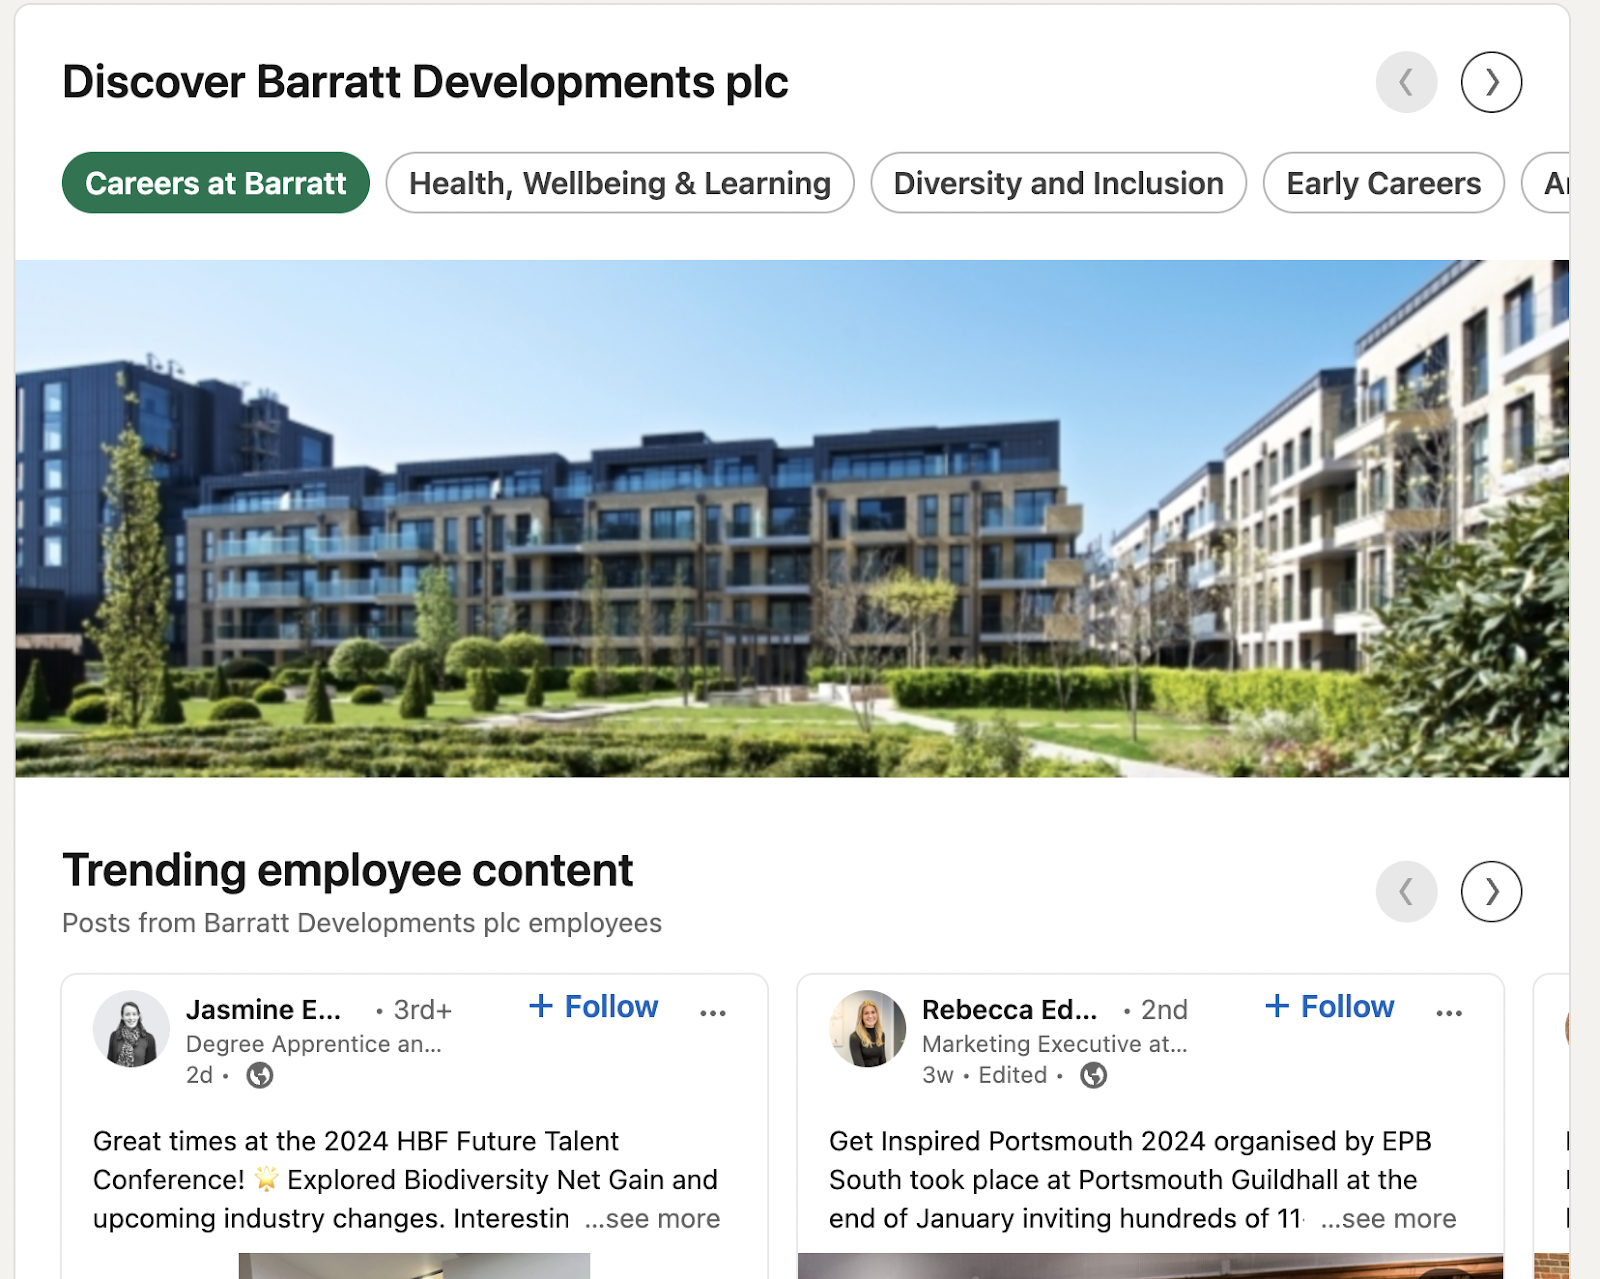 Barratt Developments are investing in LinkedIn